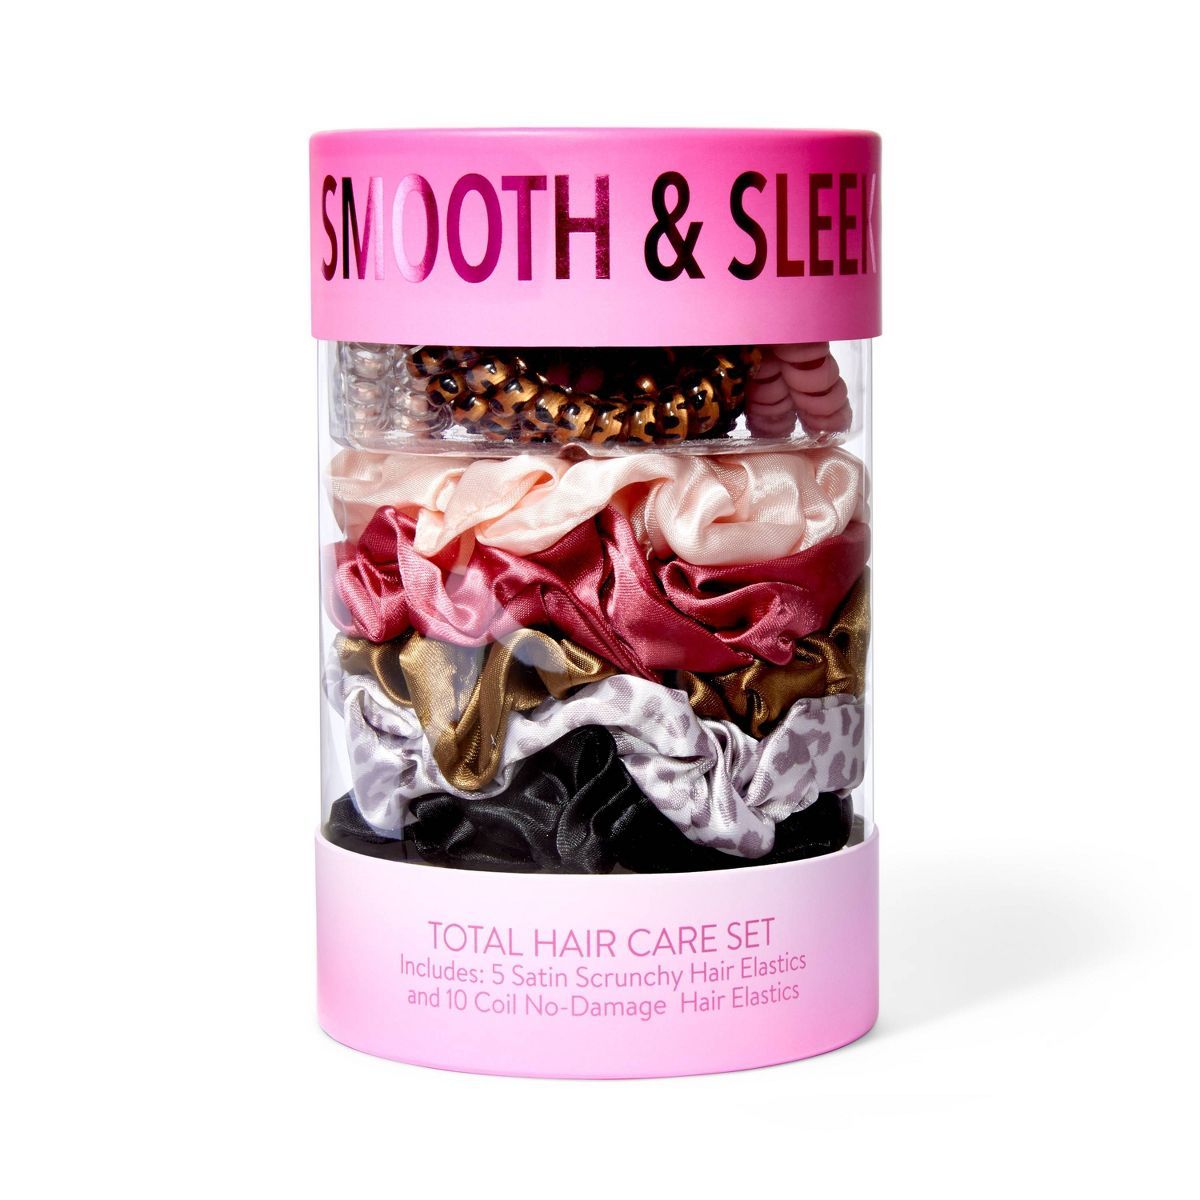 Scrunchie and Hair Tie Gift Set - Smooth & Sleek - 15ct | Target